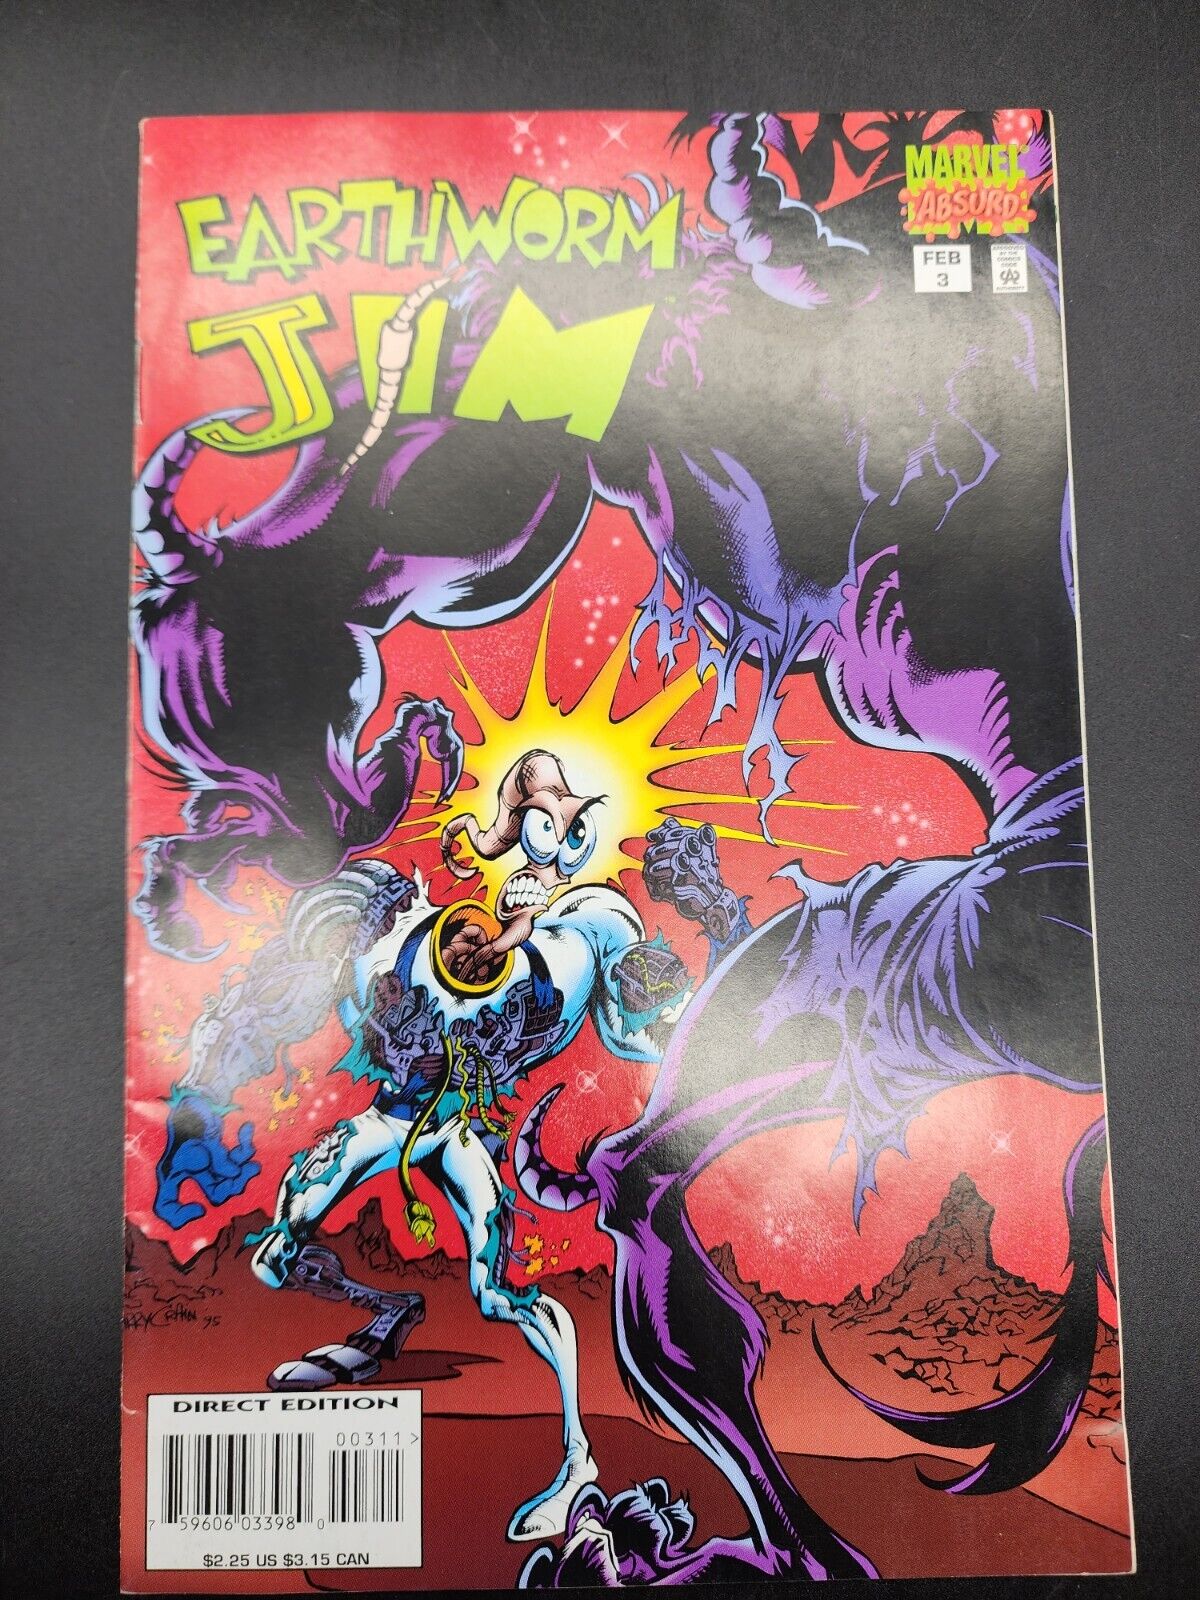 EARTHWORM JIM #3 Marvel Absurd Comics 1996 - Direct Edition